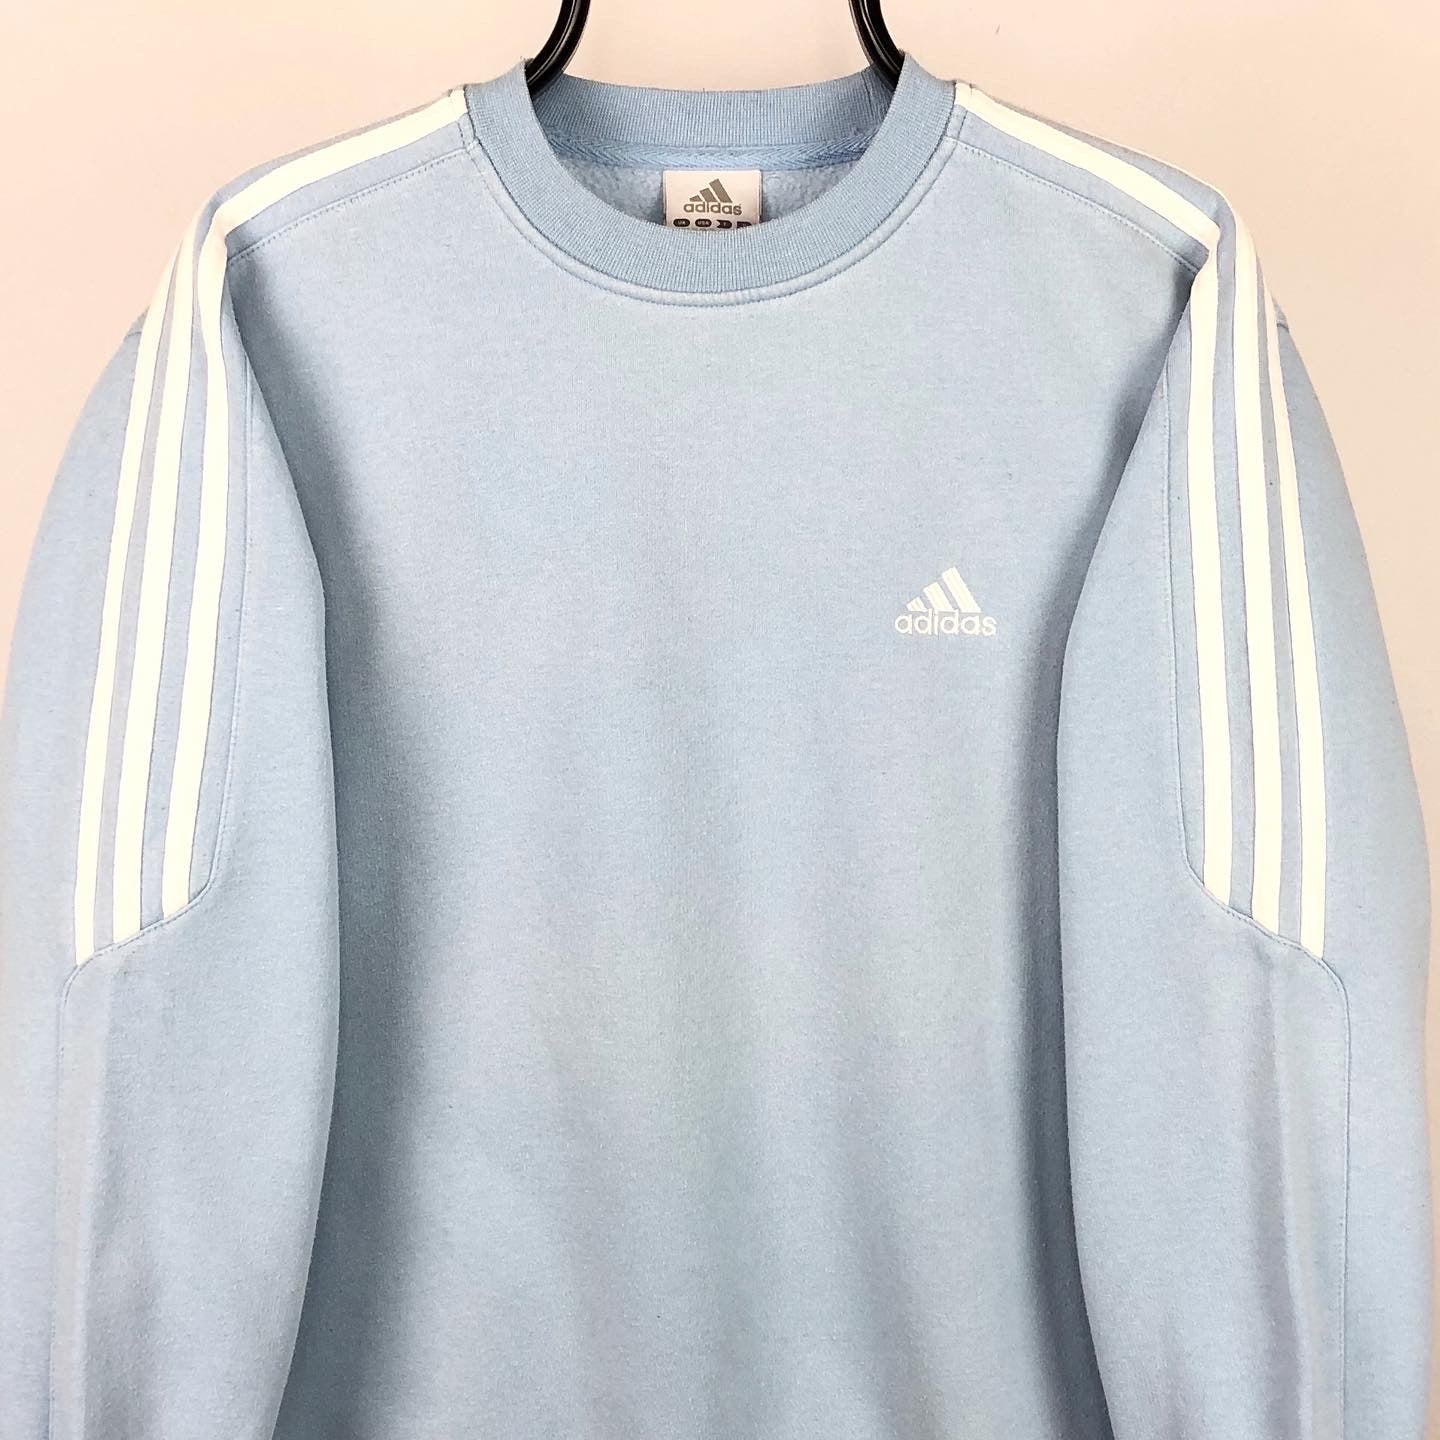 Vintage Adidas Embroidered Small Logo Sweatshirt in Baby Blue - Men's Medium/Women's Large